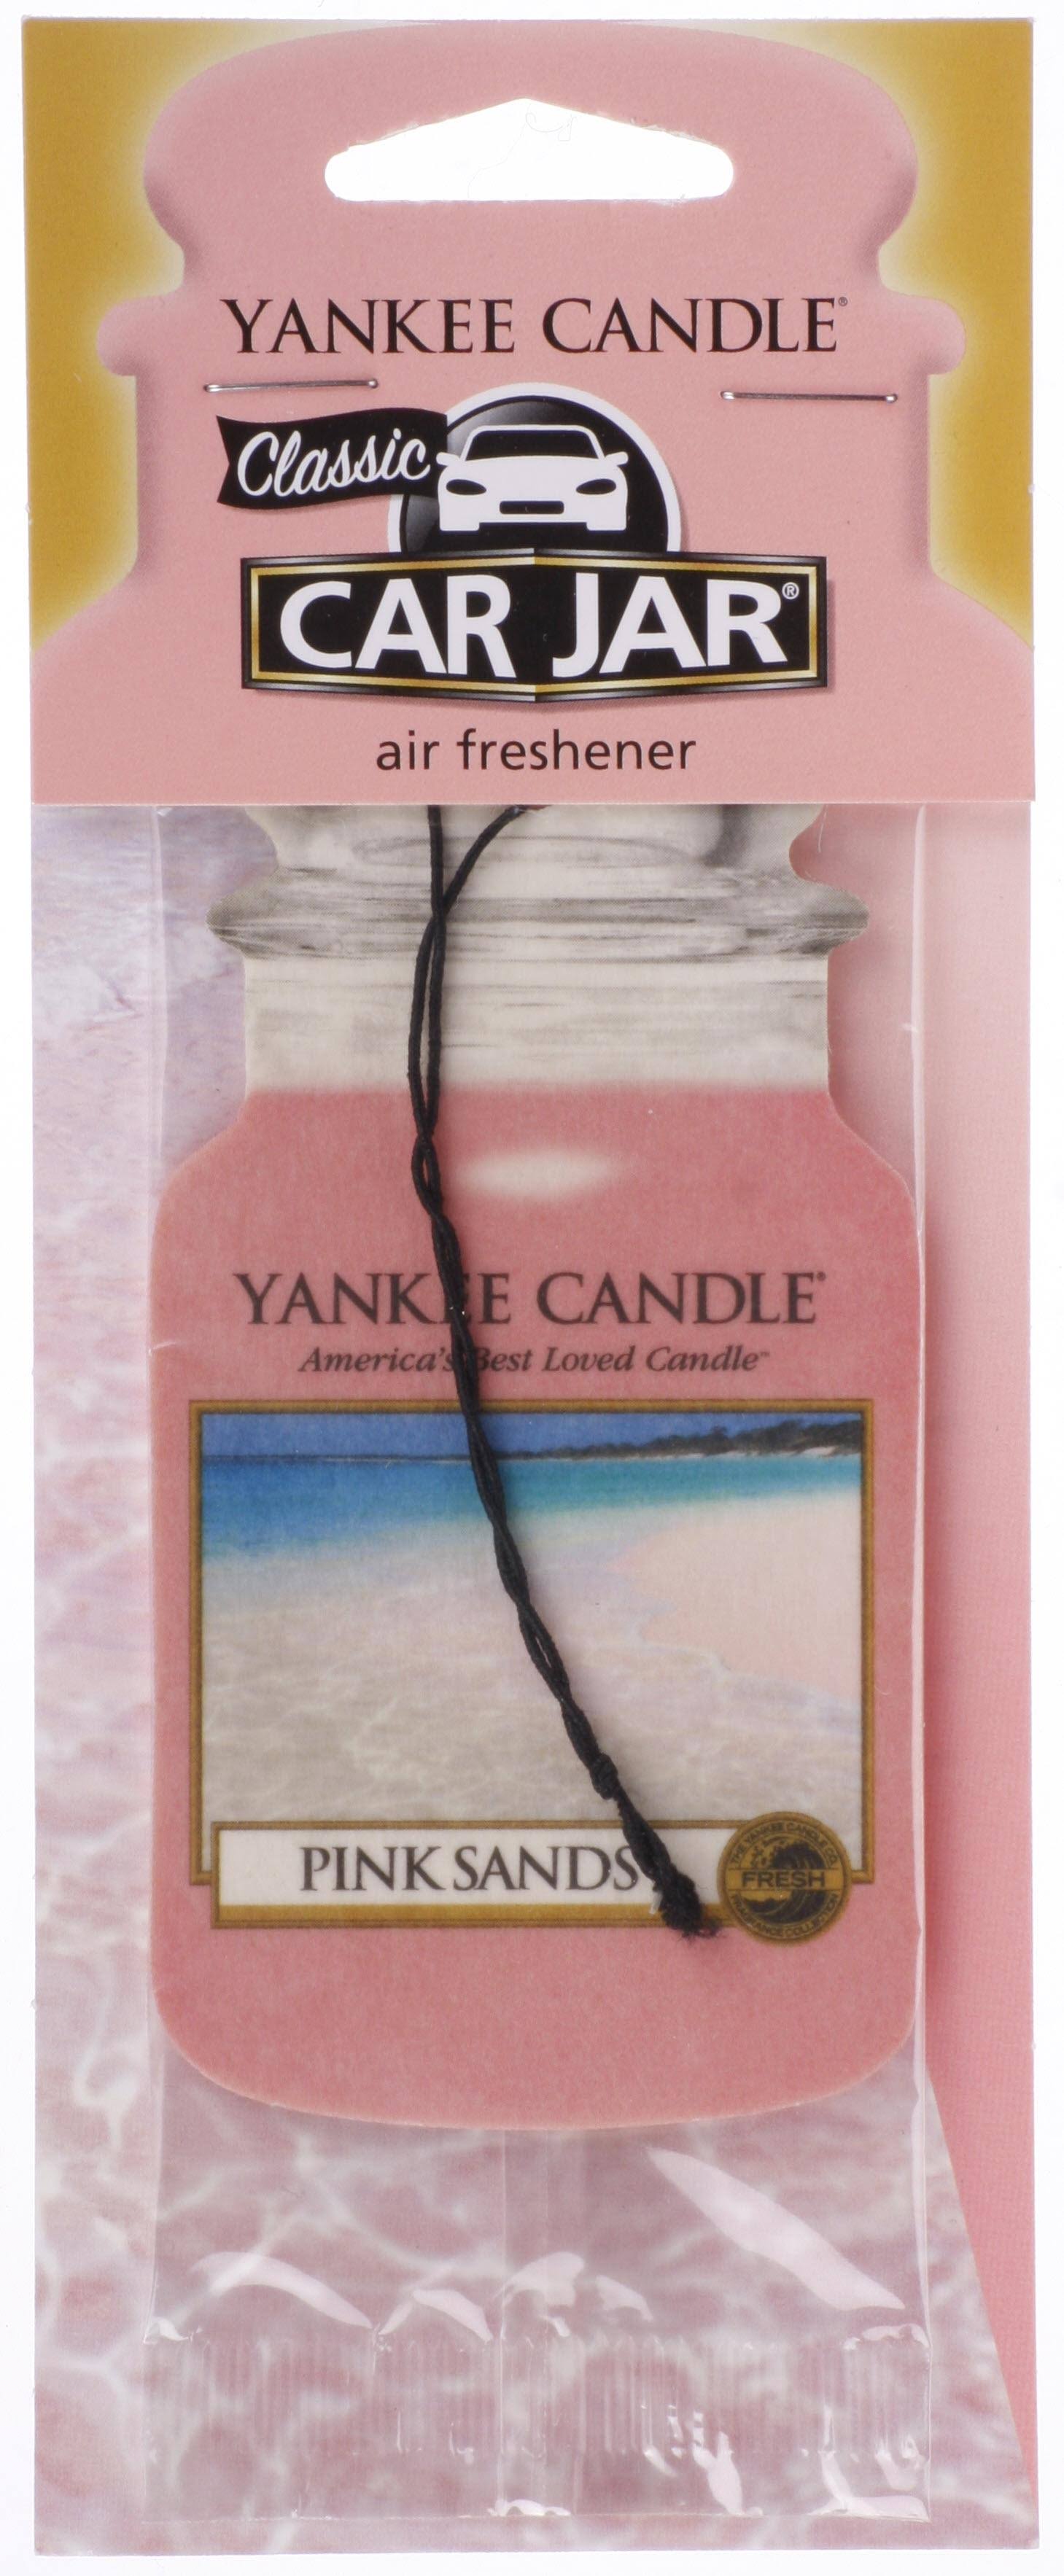 Yankee Candle Hanging Air Freshener - Pink Sands